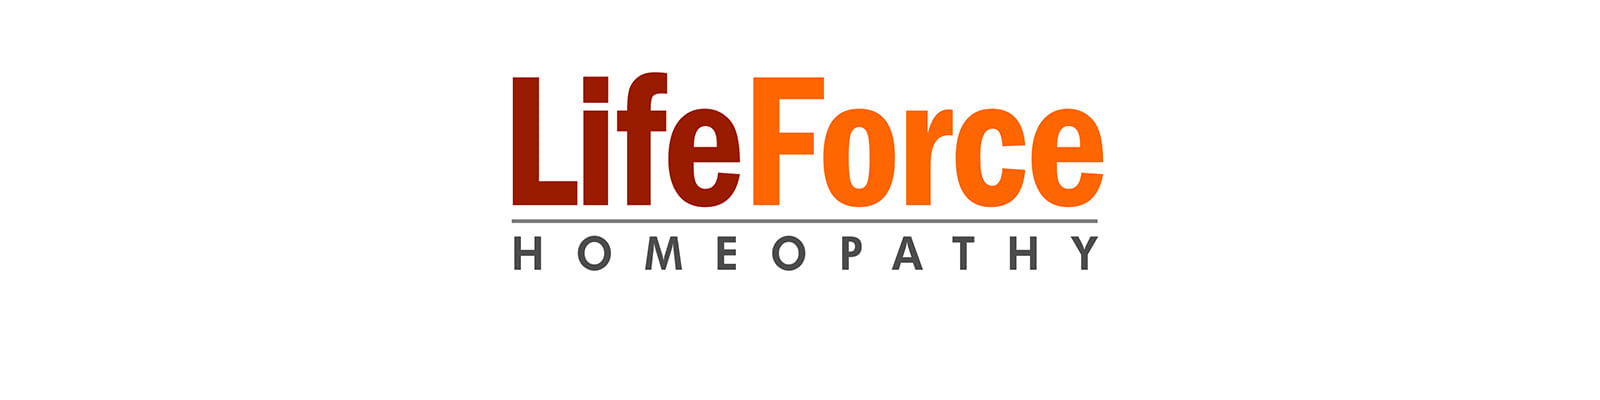 Life Force Homeopathy - Borivali